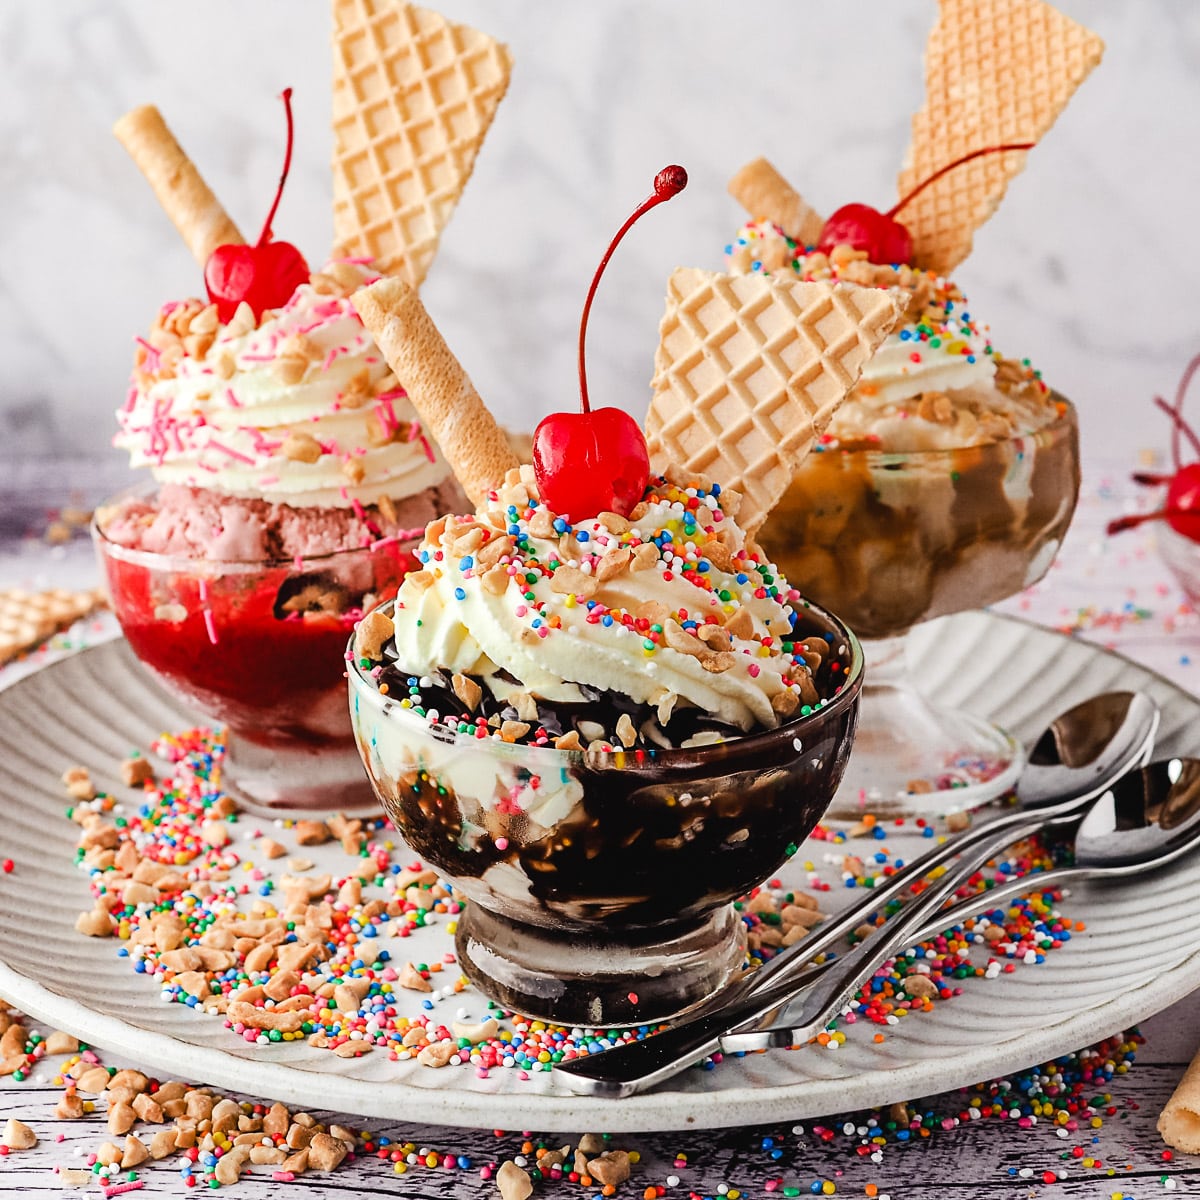 Ice Cream Sundae - Keep Calm And Eat Ice Cream